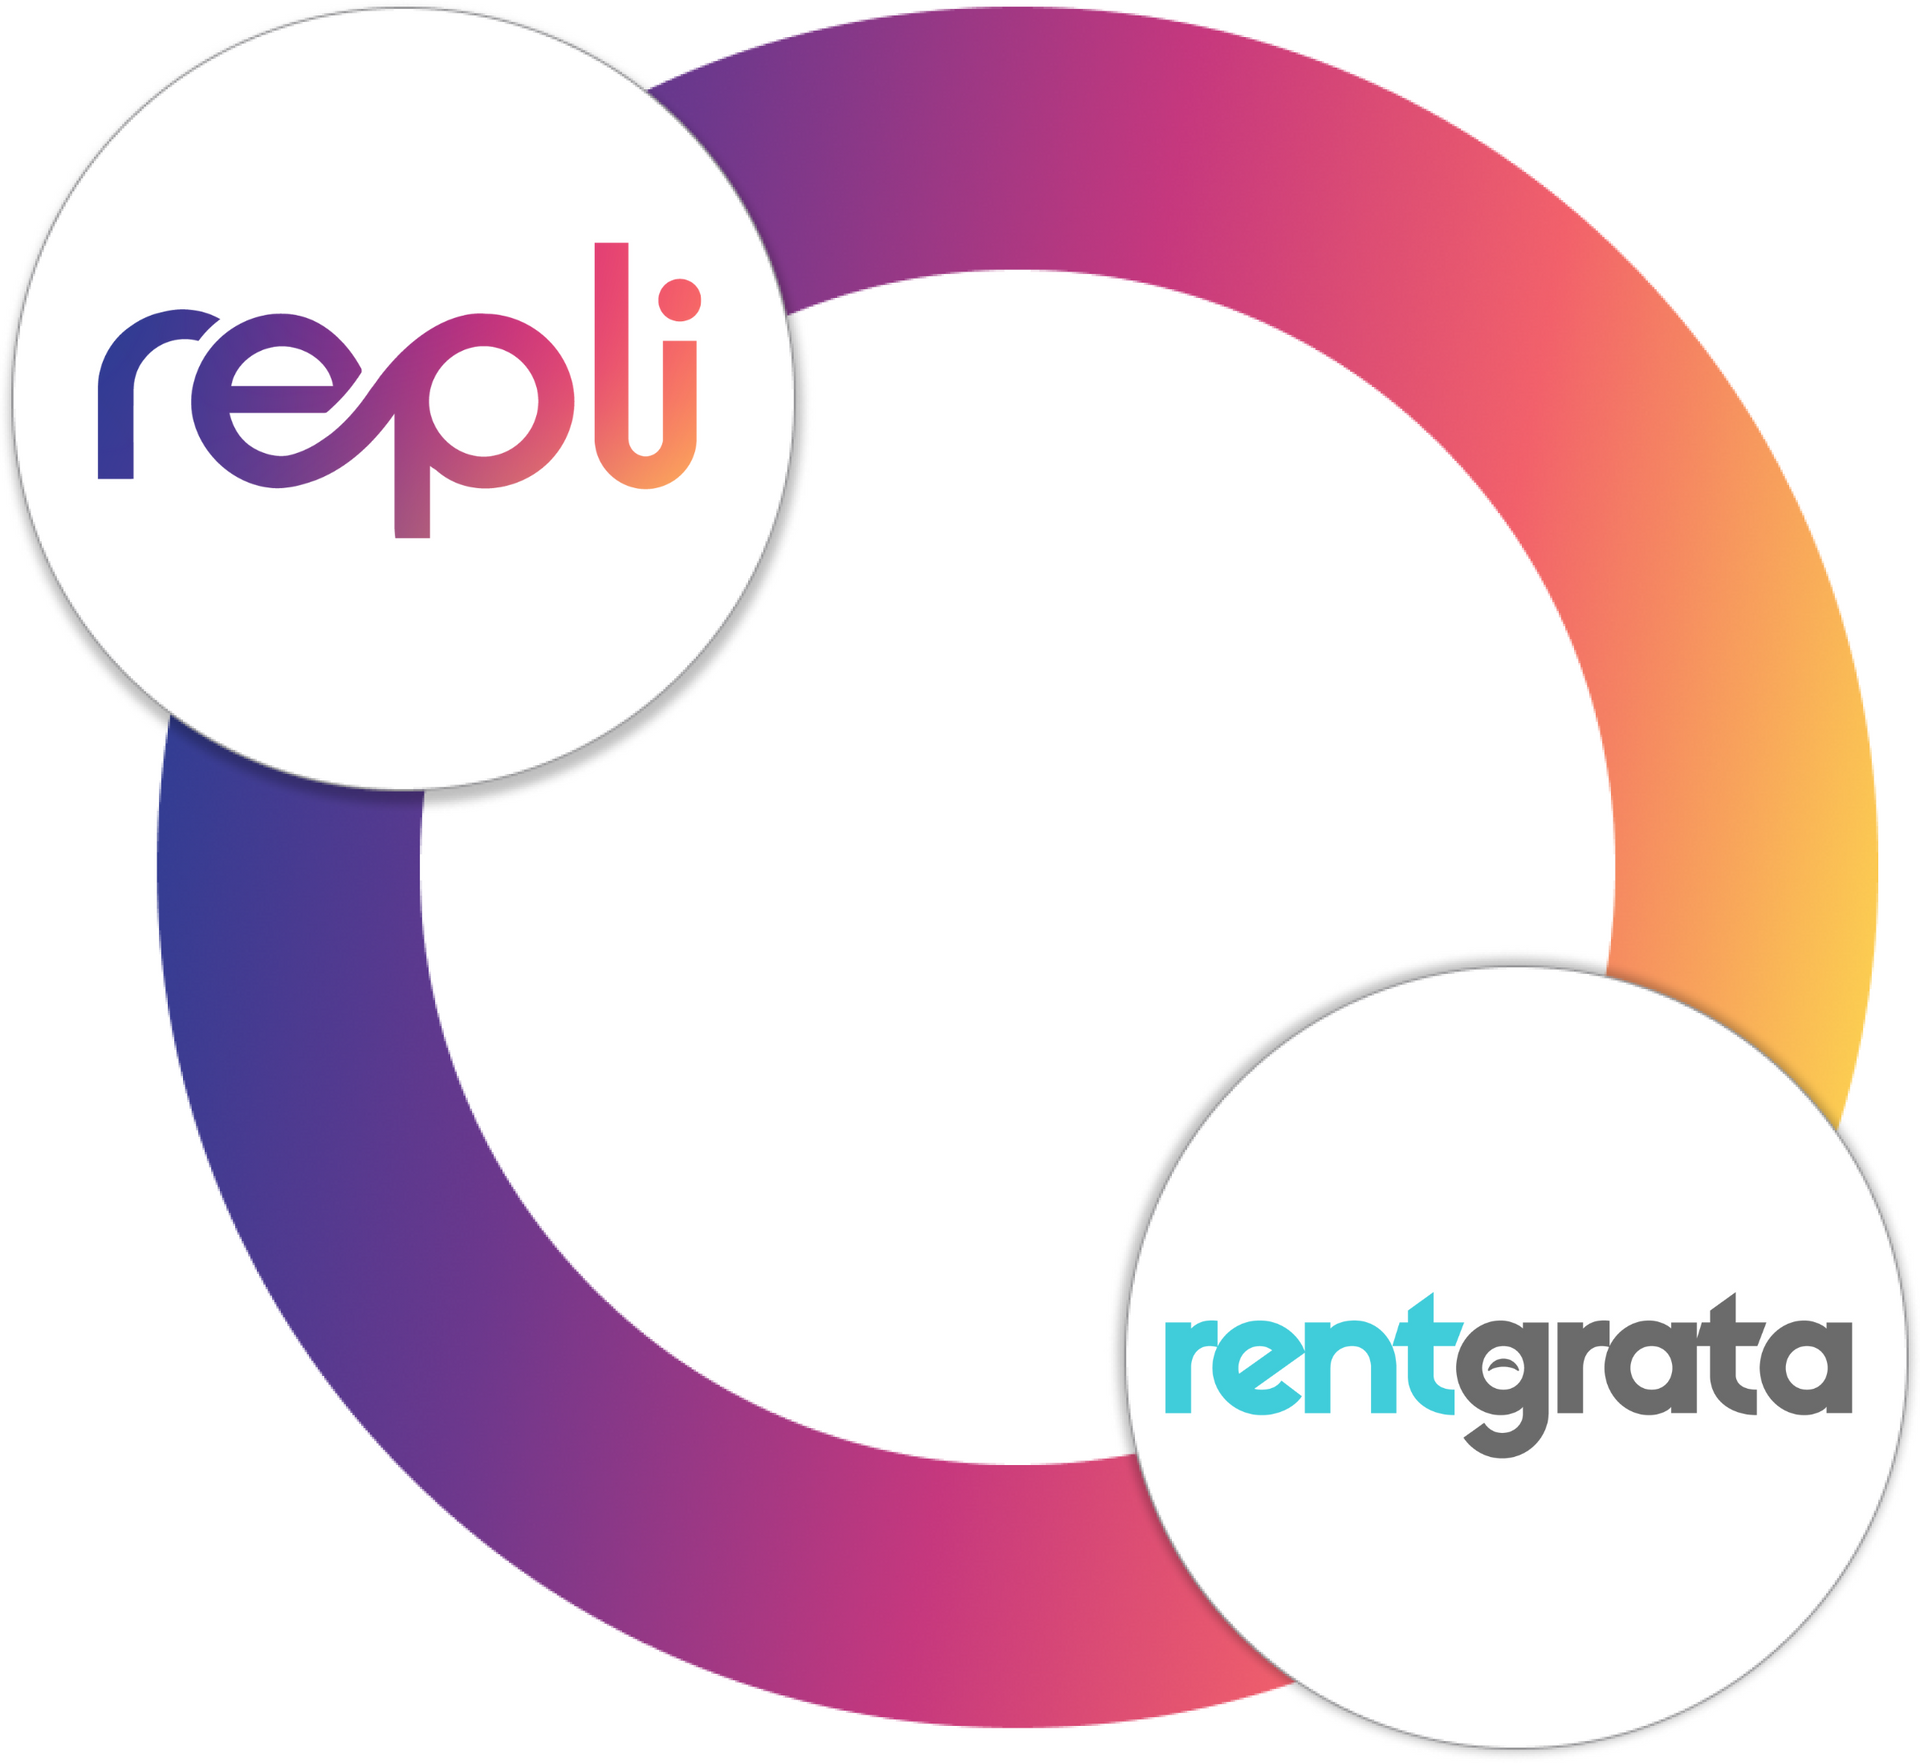 A logo for a company called repli and rent grata